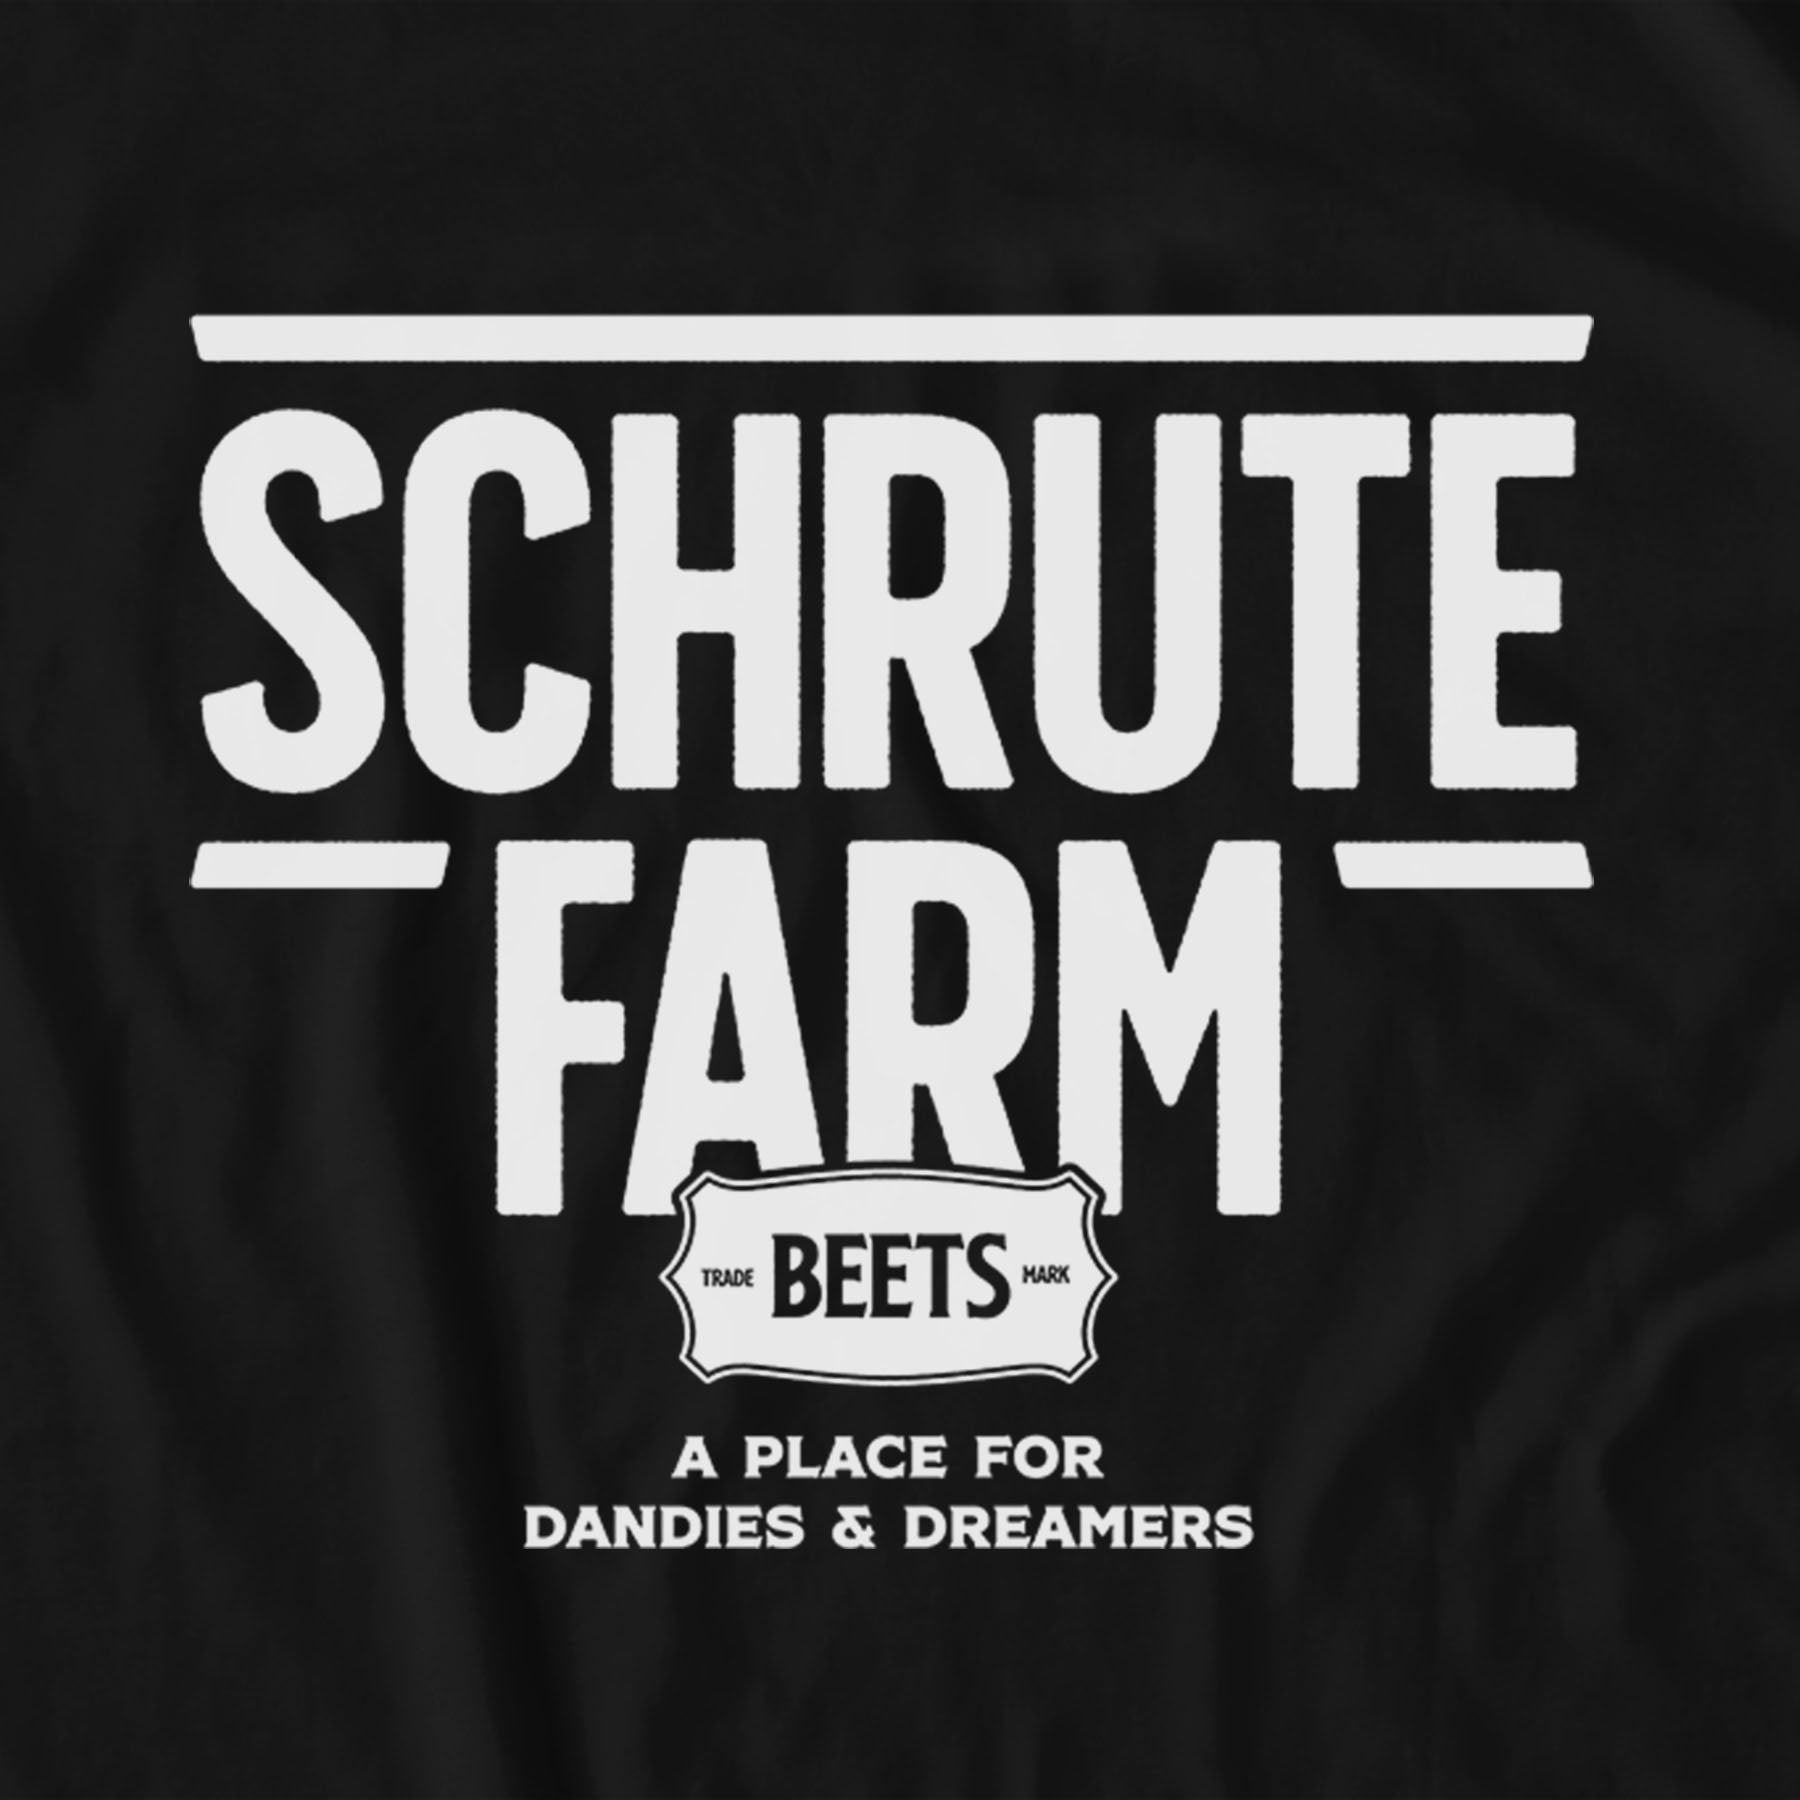 Schrute Farm T-Shirt - Black